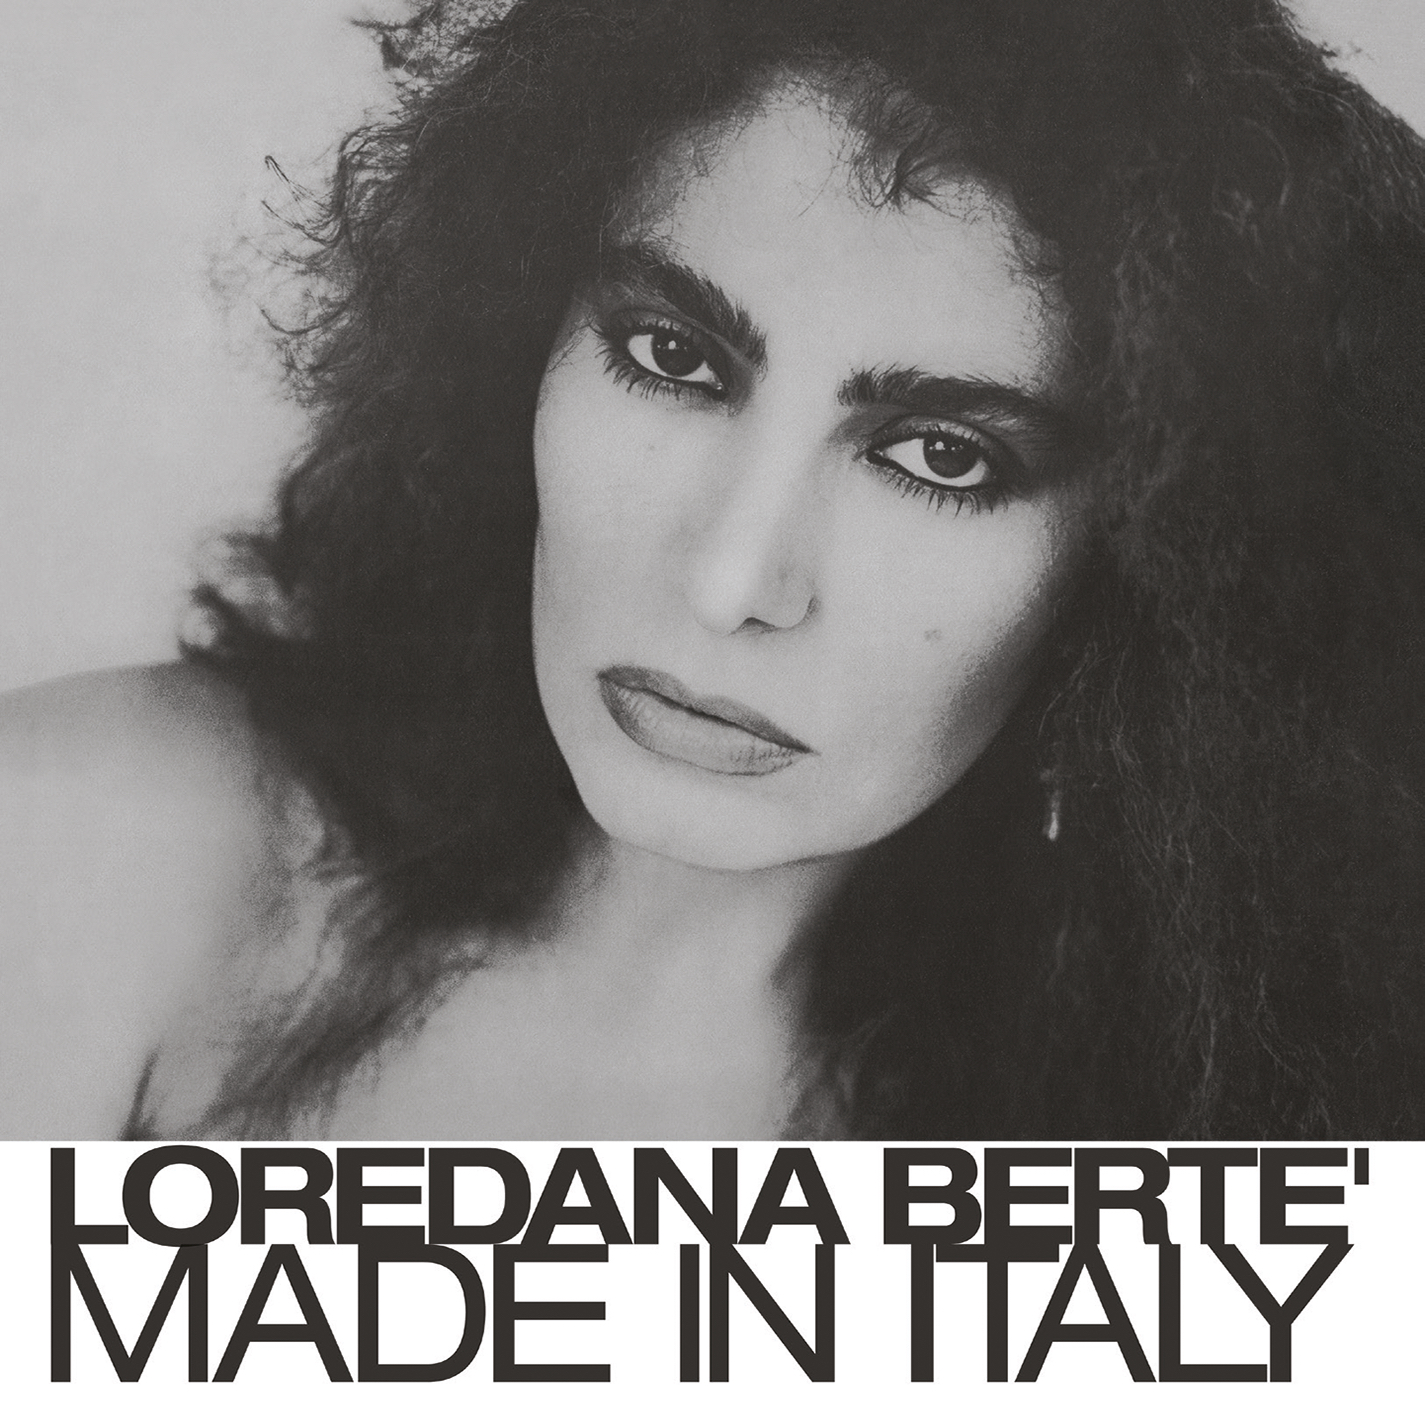 Loredana Bertè: vinile “Made in Italy”